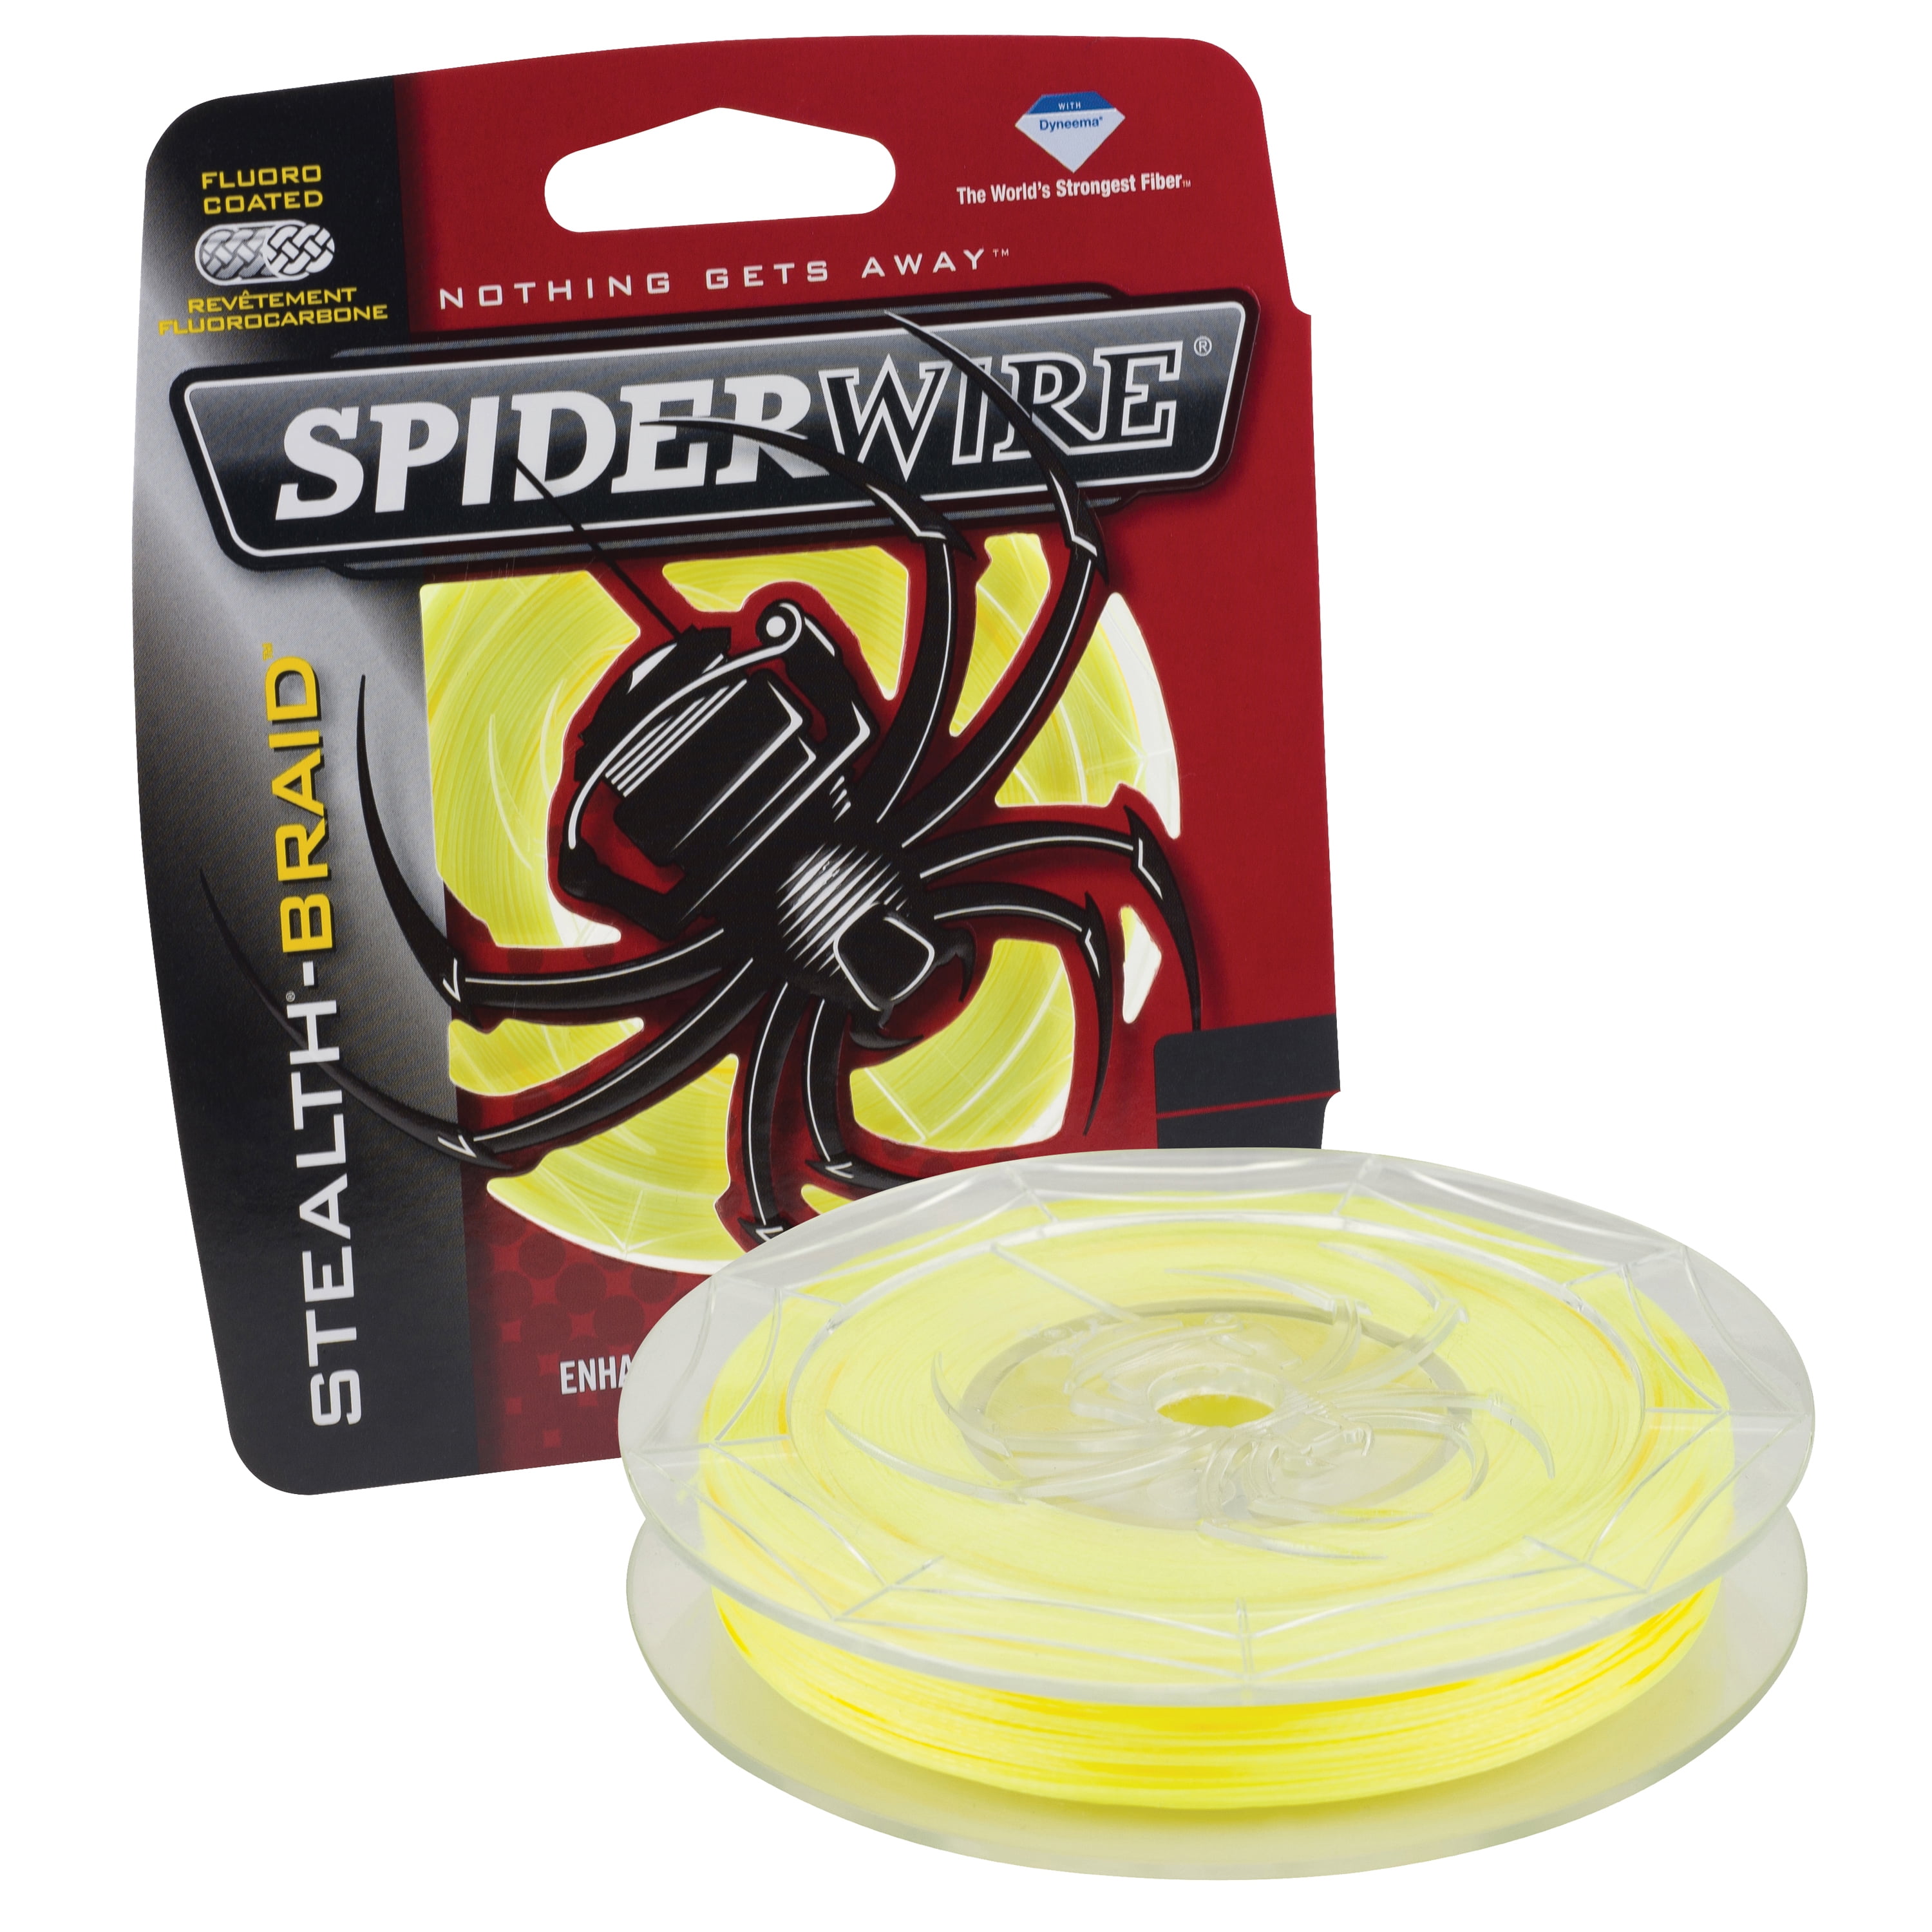 Spiderwire - Stealth Braid, Hi-Vis Yellow - 40 lb, 300 Yards